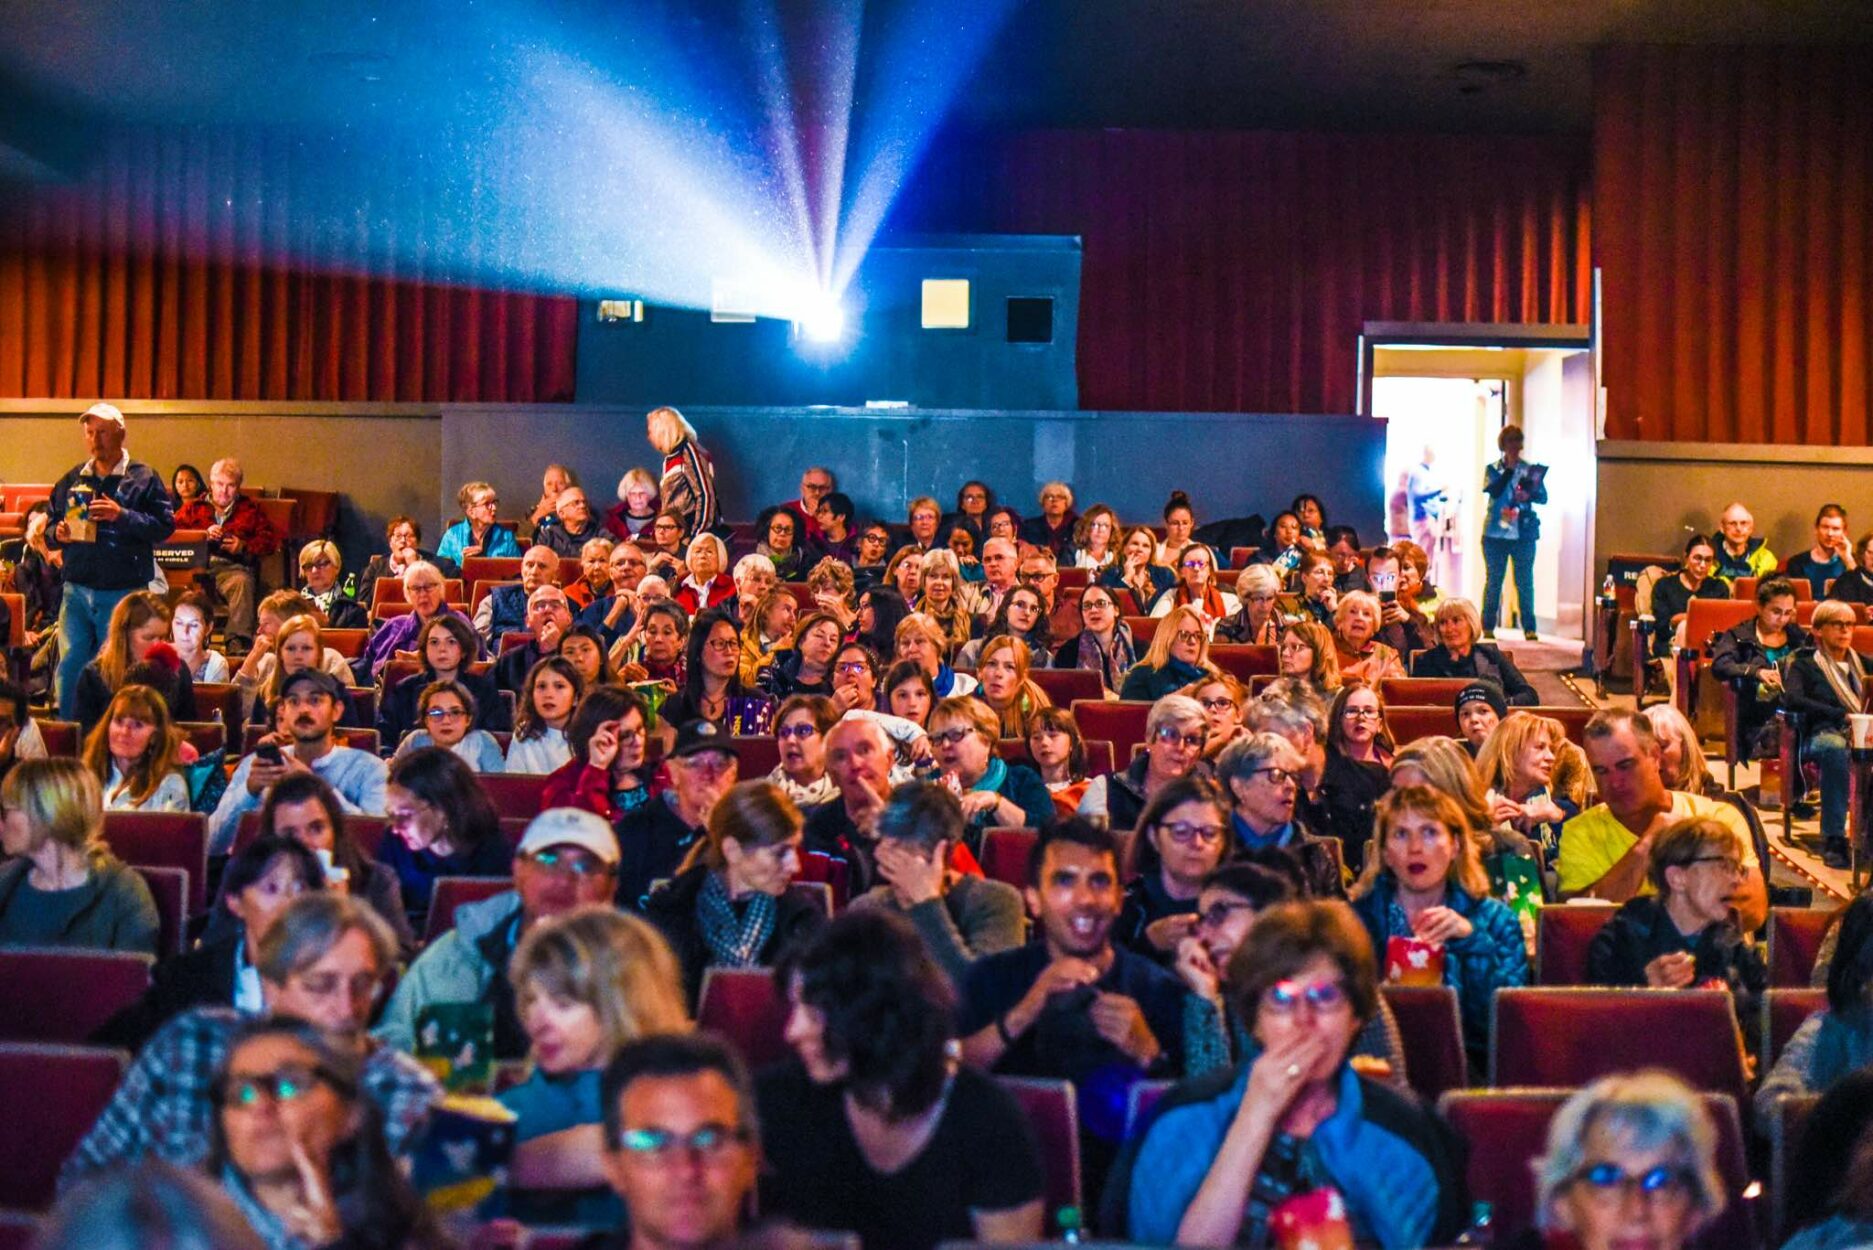 Calgary International Film Festival Event Image